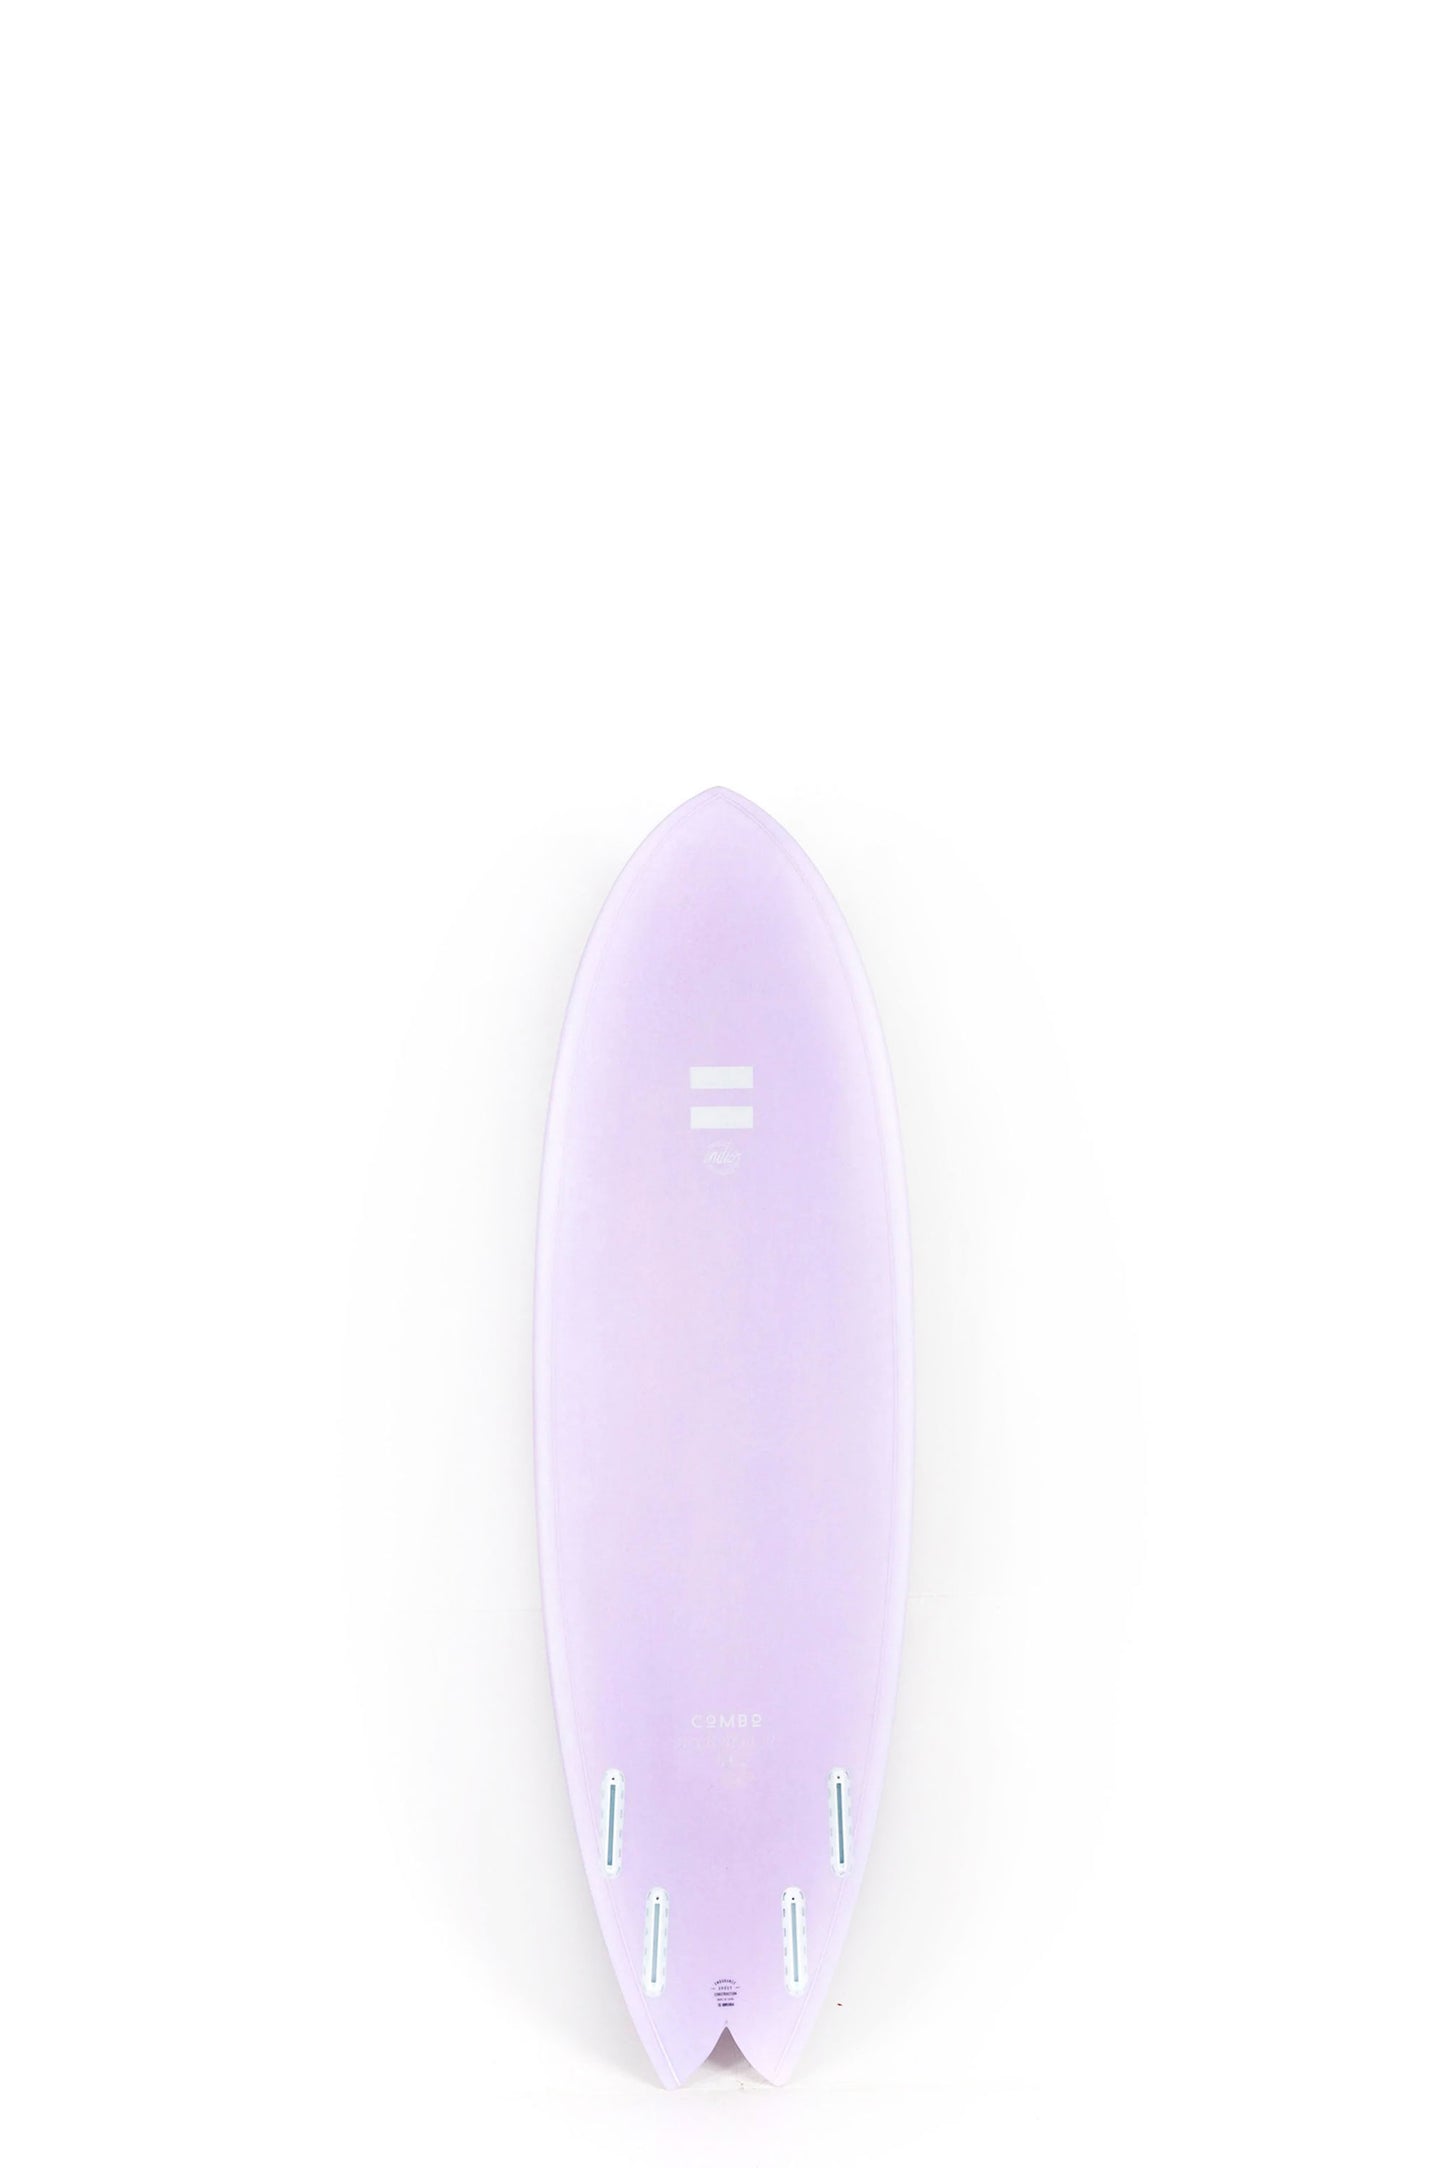 Indio Surfboards - COMBO Purple - 5'7" x 20 1/4 x 2 3/8 x 31,70L